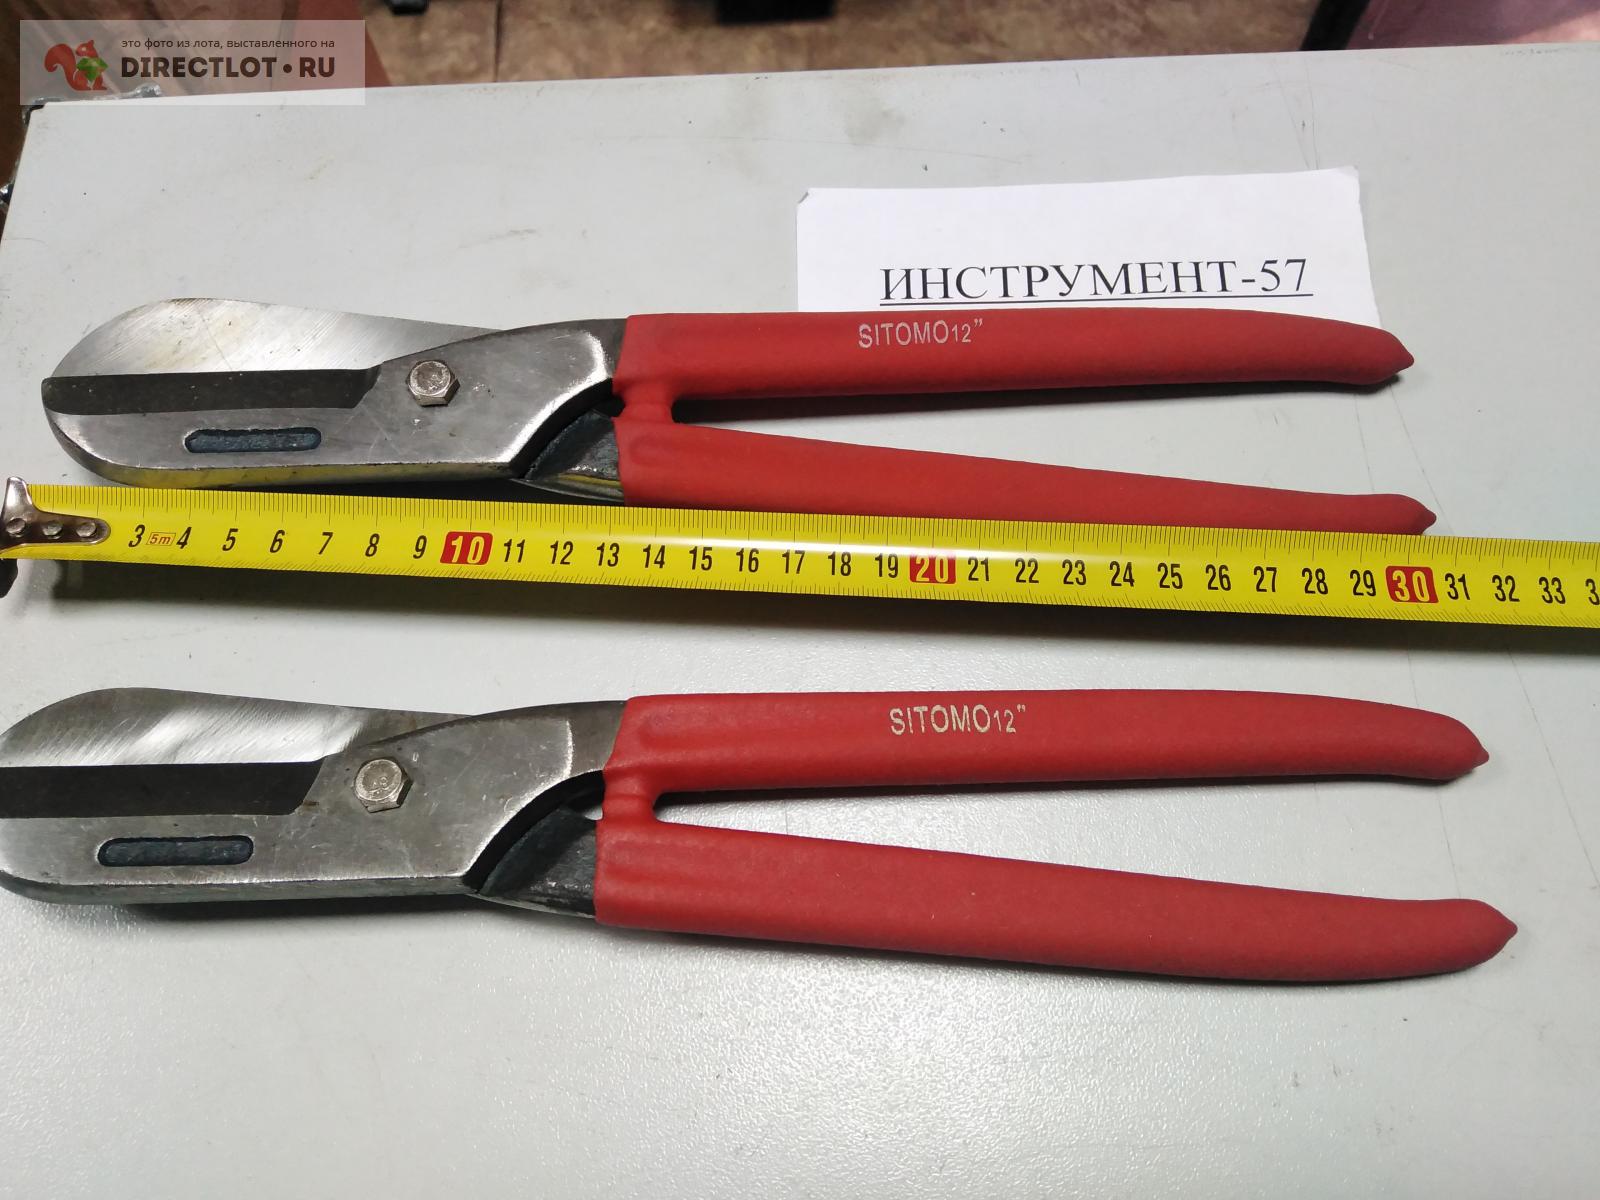 Ножницы по металлу  в Орле цена 300 Р на DIRECTLOT.RU .